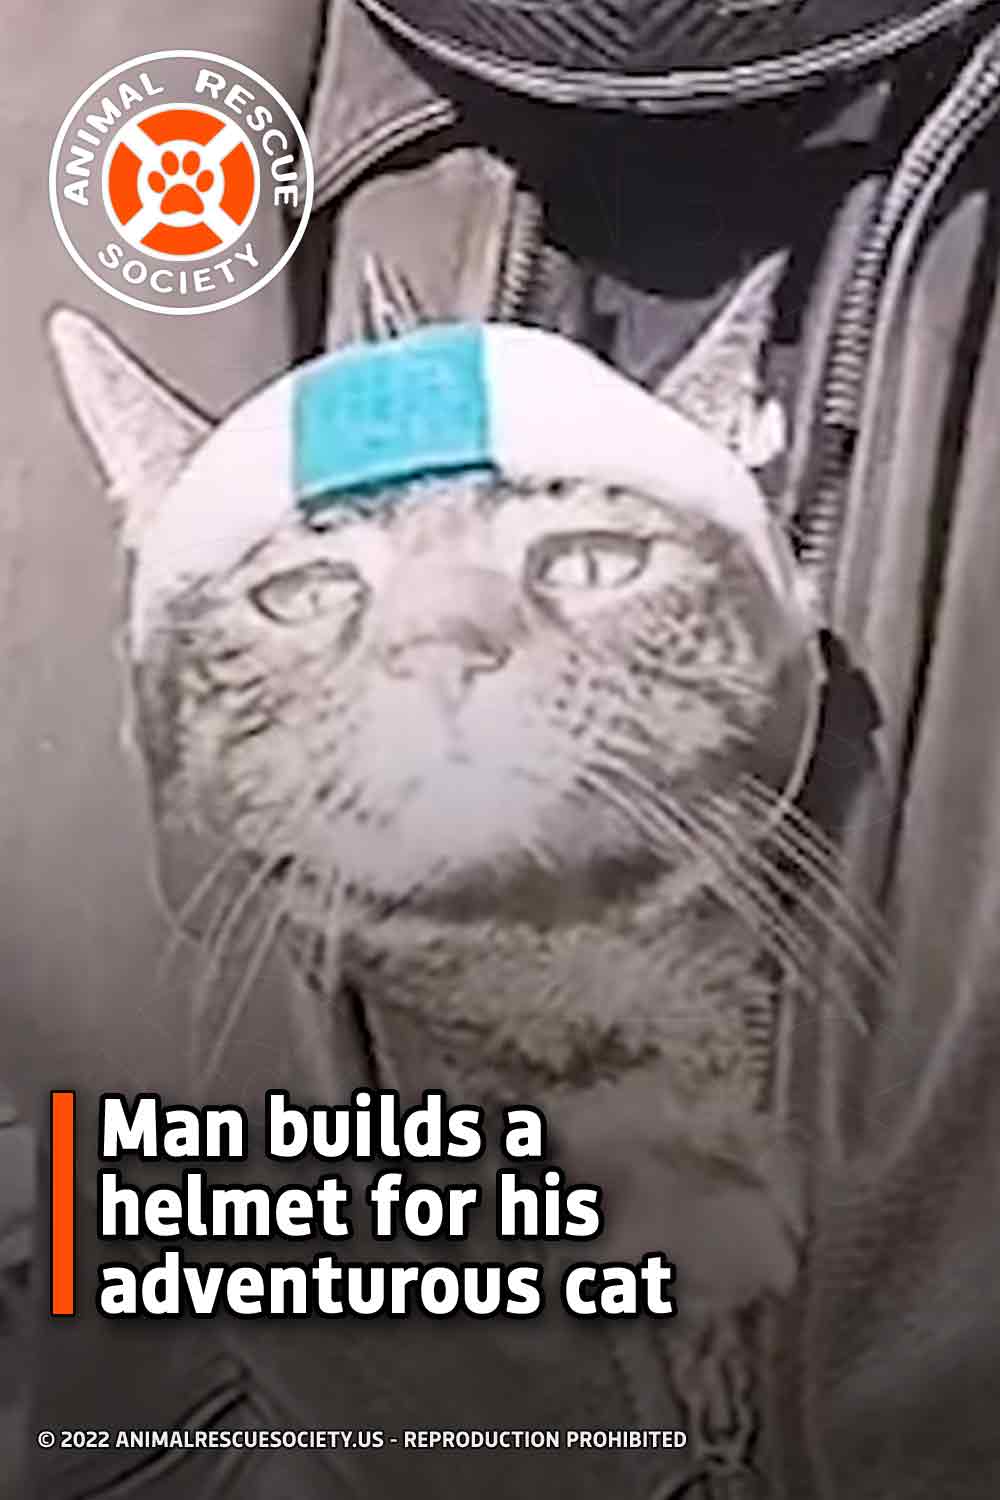 Man builds a helmet for his adventurous cat